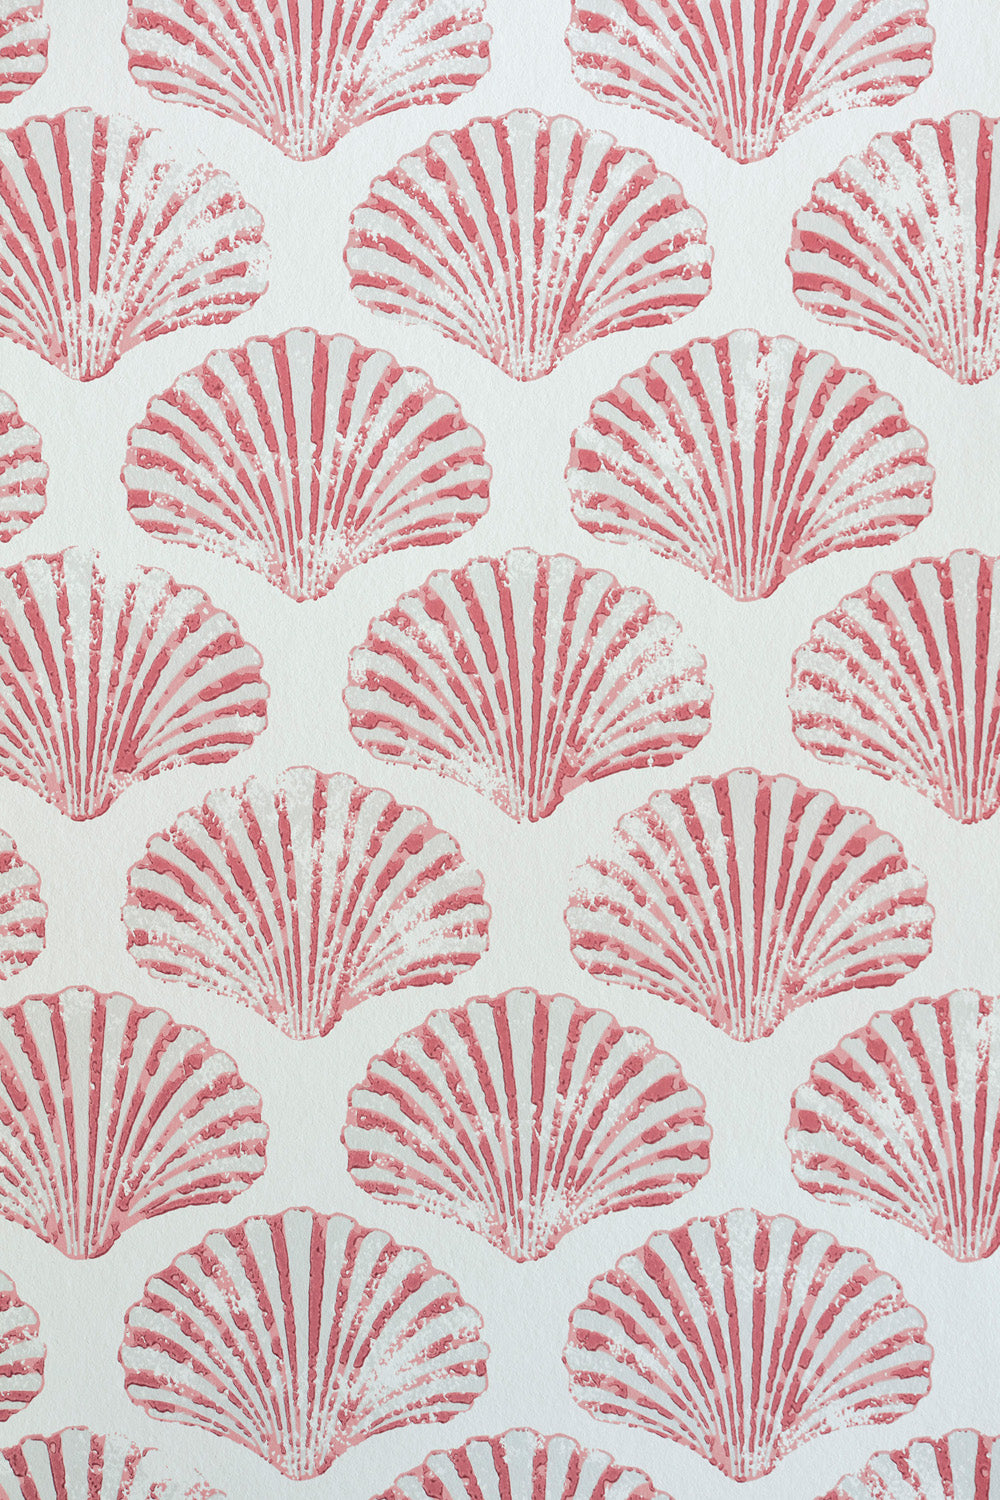 Scallop Shell Nursery Room Wallpaper 4 - Pink